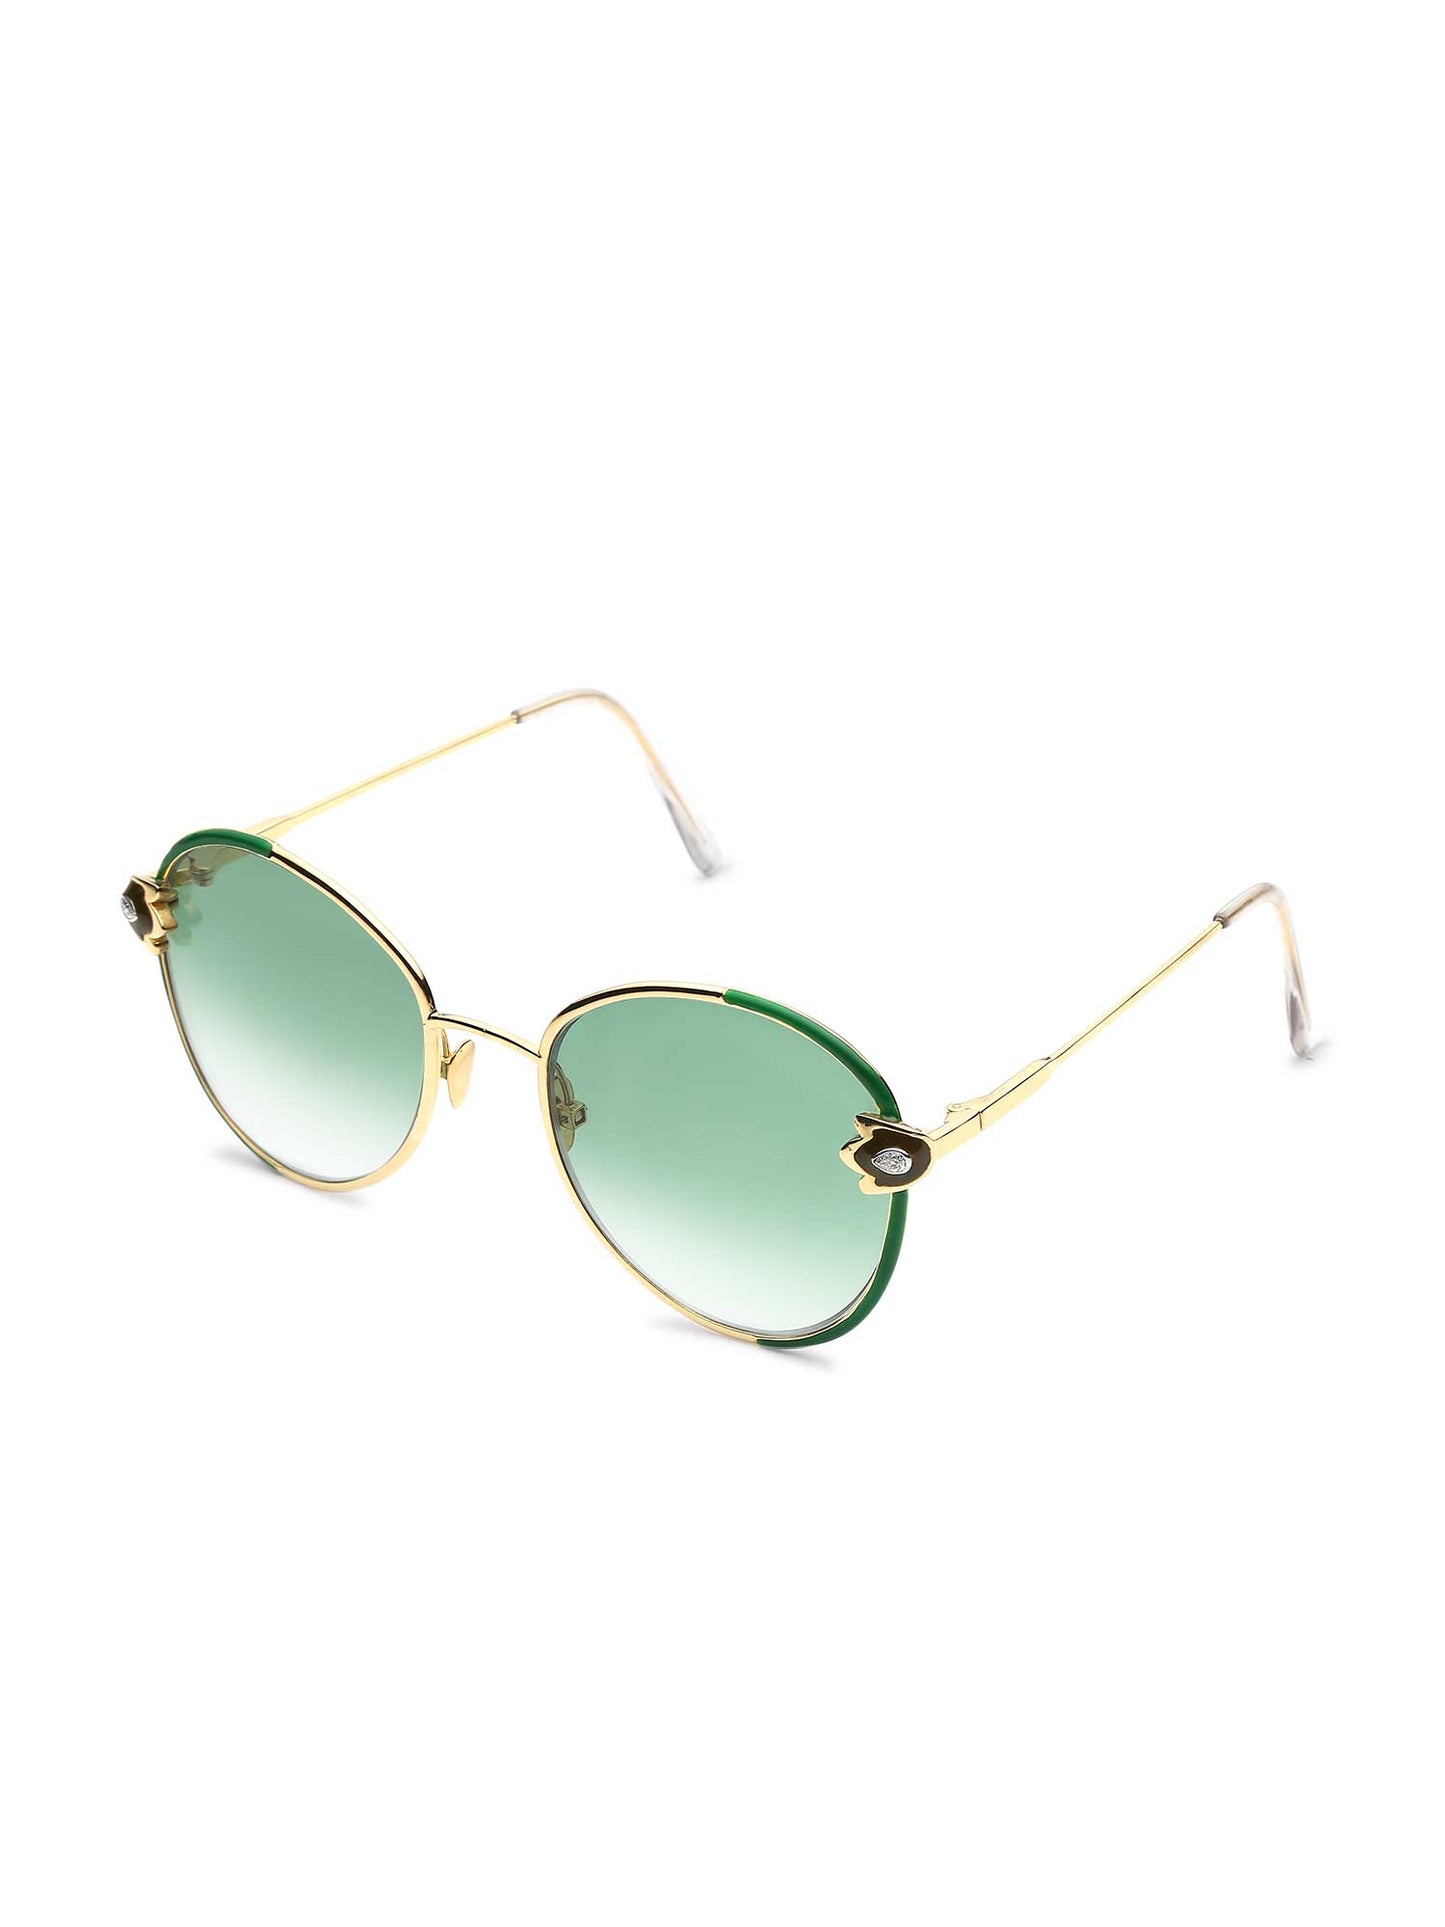 Green Gold Sunglasses